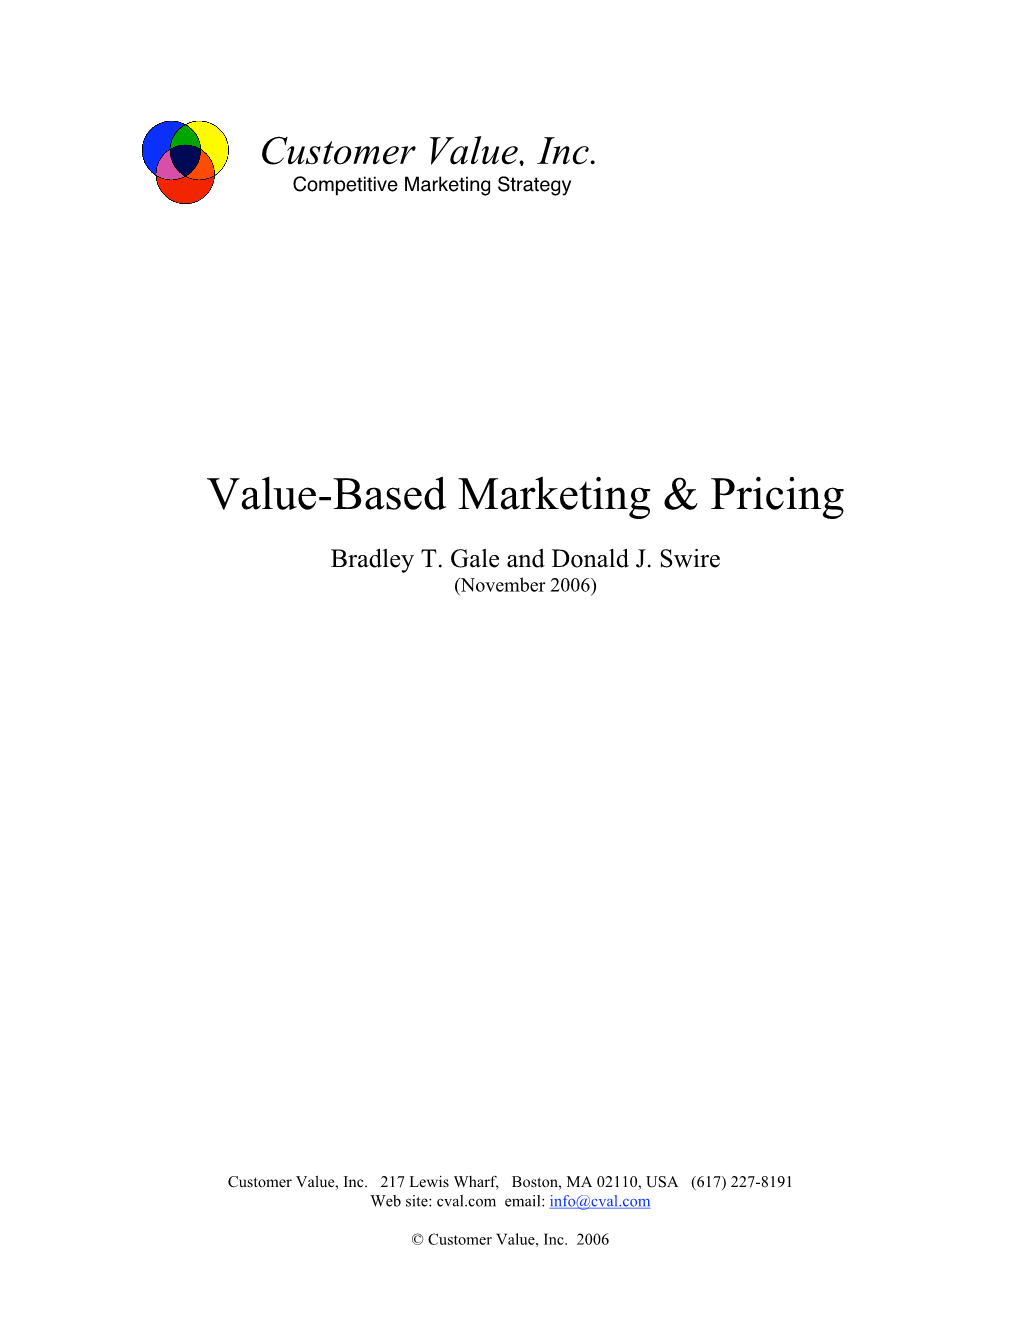 Value-Based Marketing & Pricing